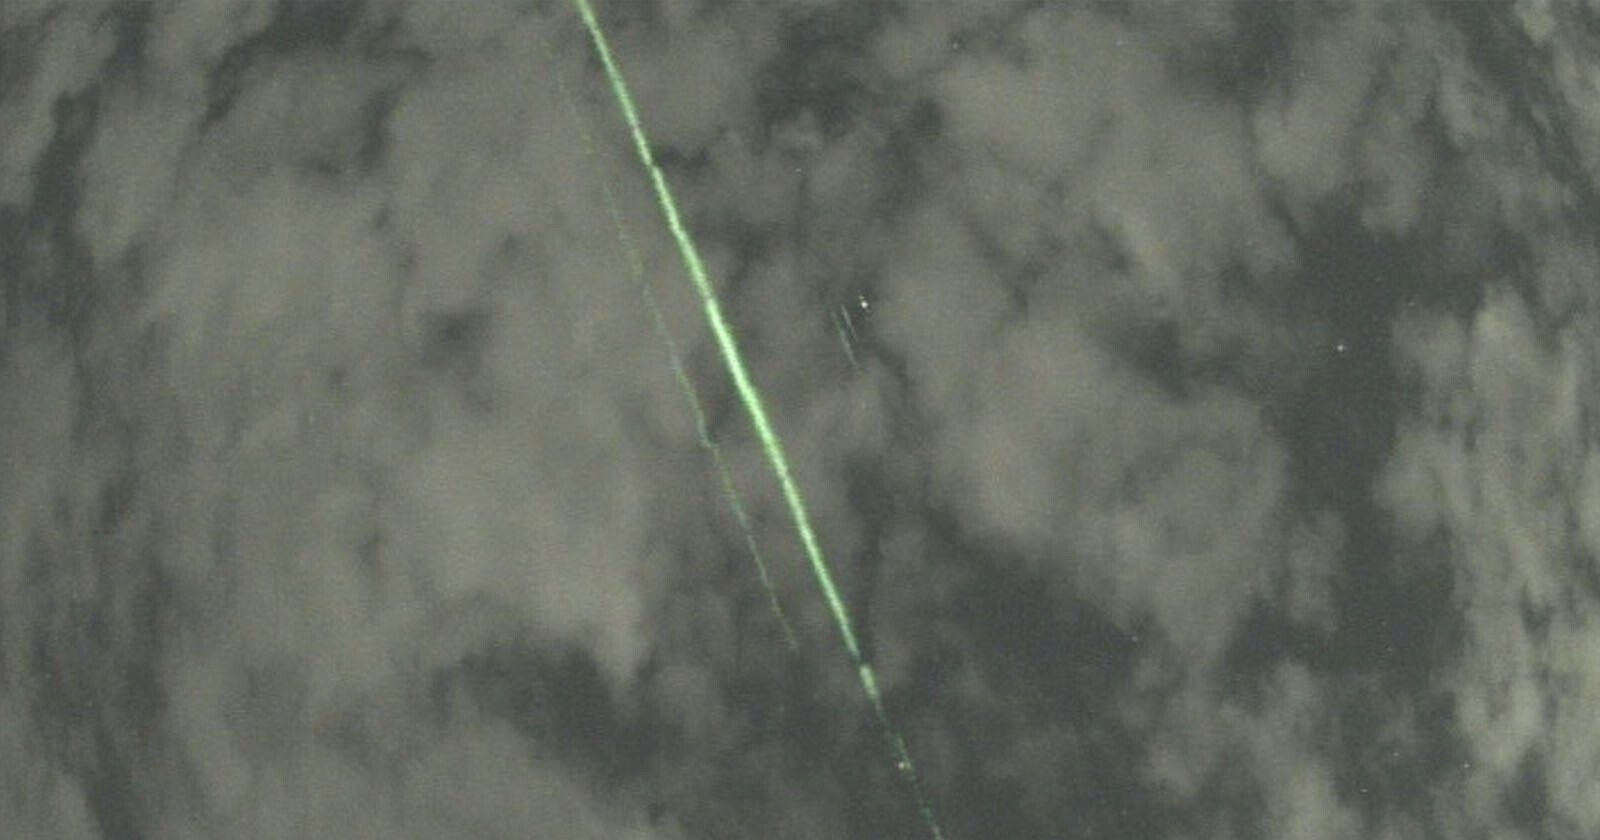  astronomer captures nasa mysterious green laser beams 